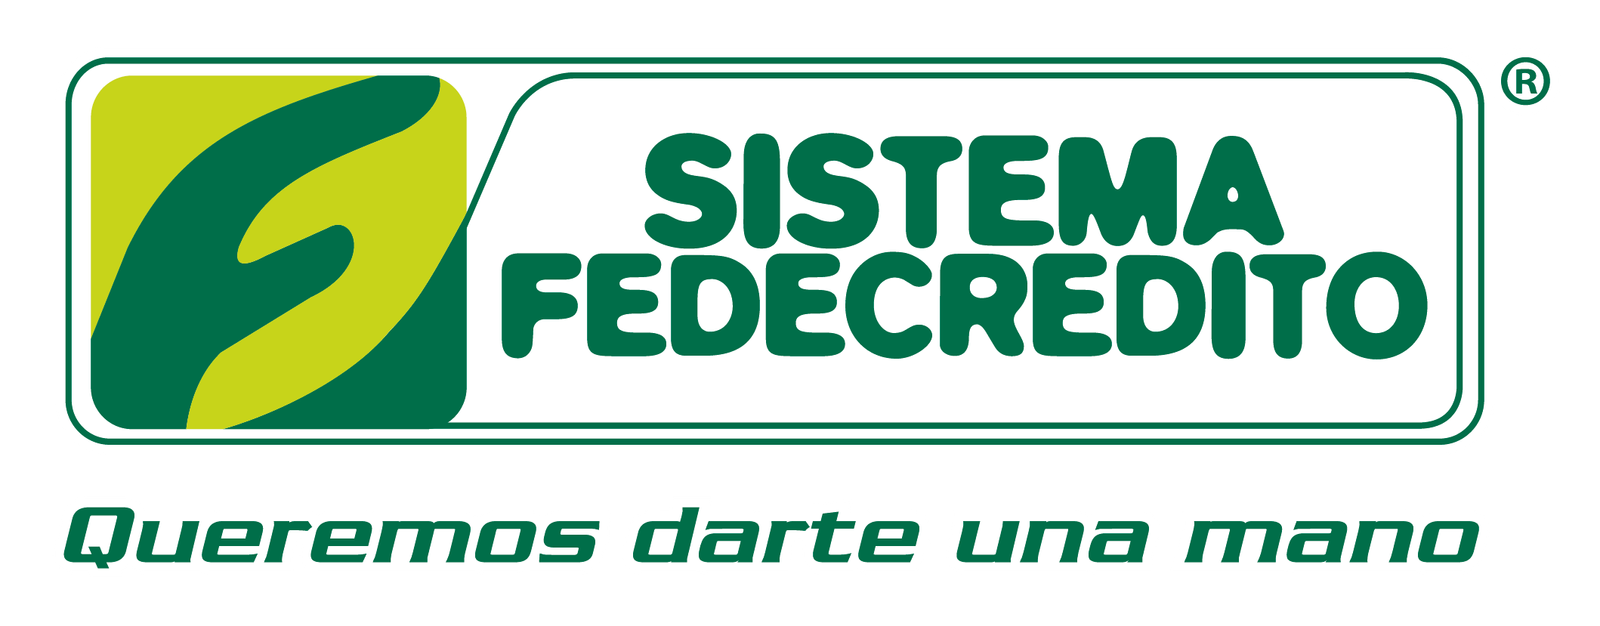 Sistema Fedecredito